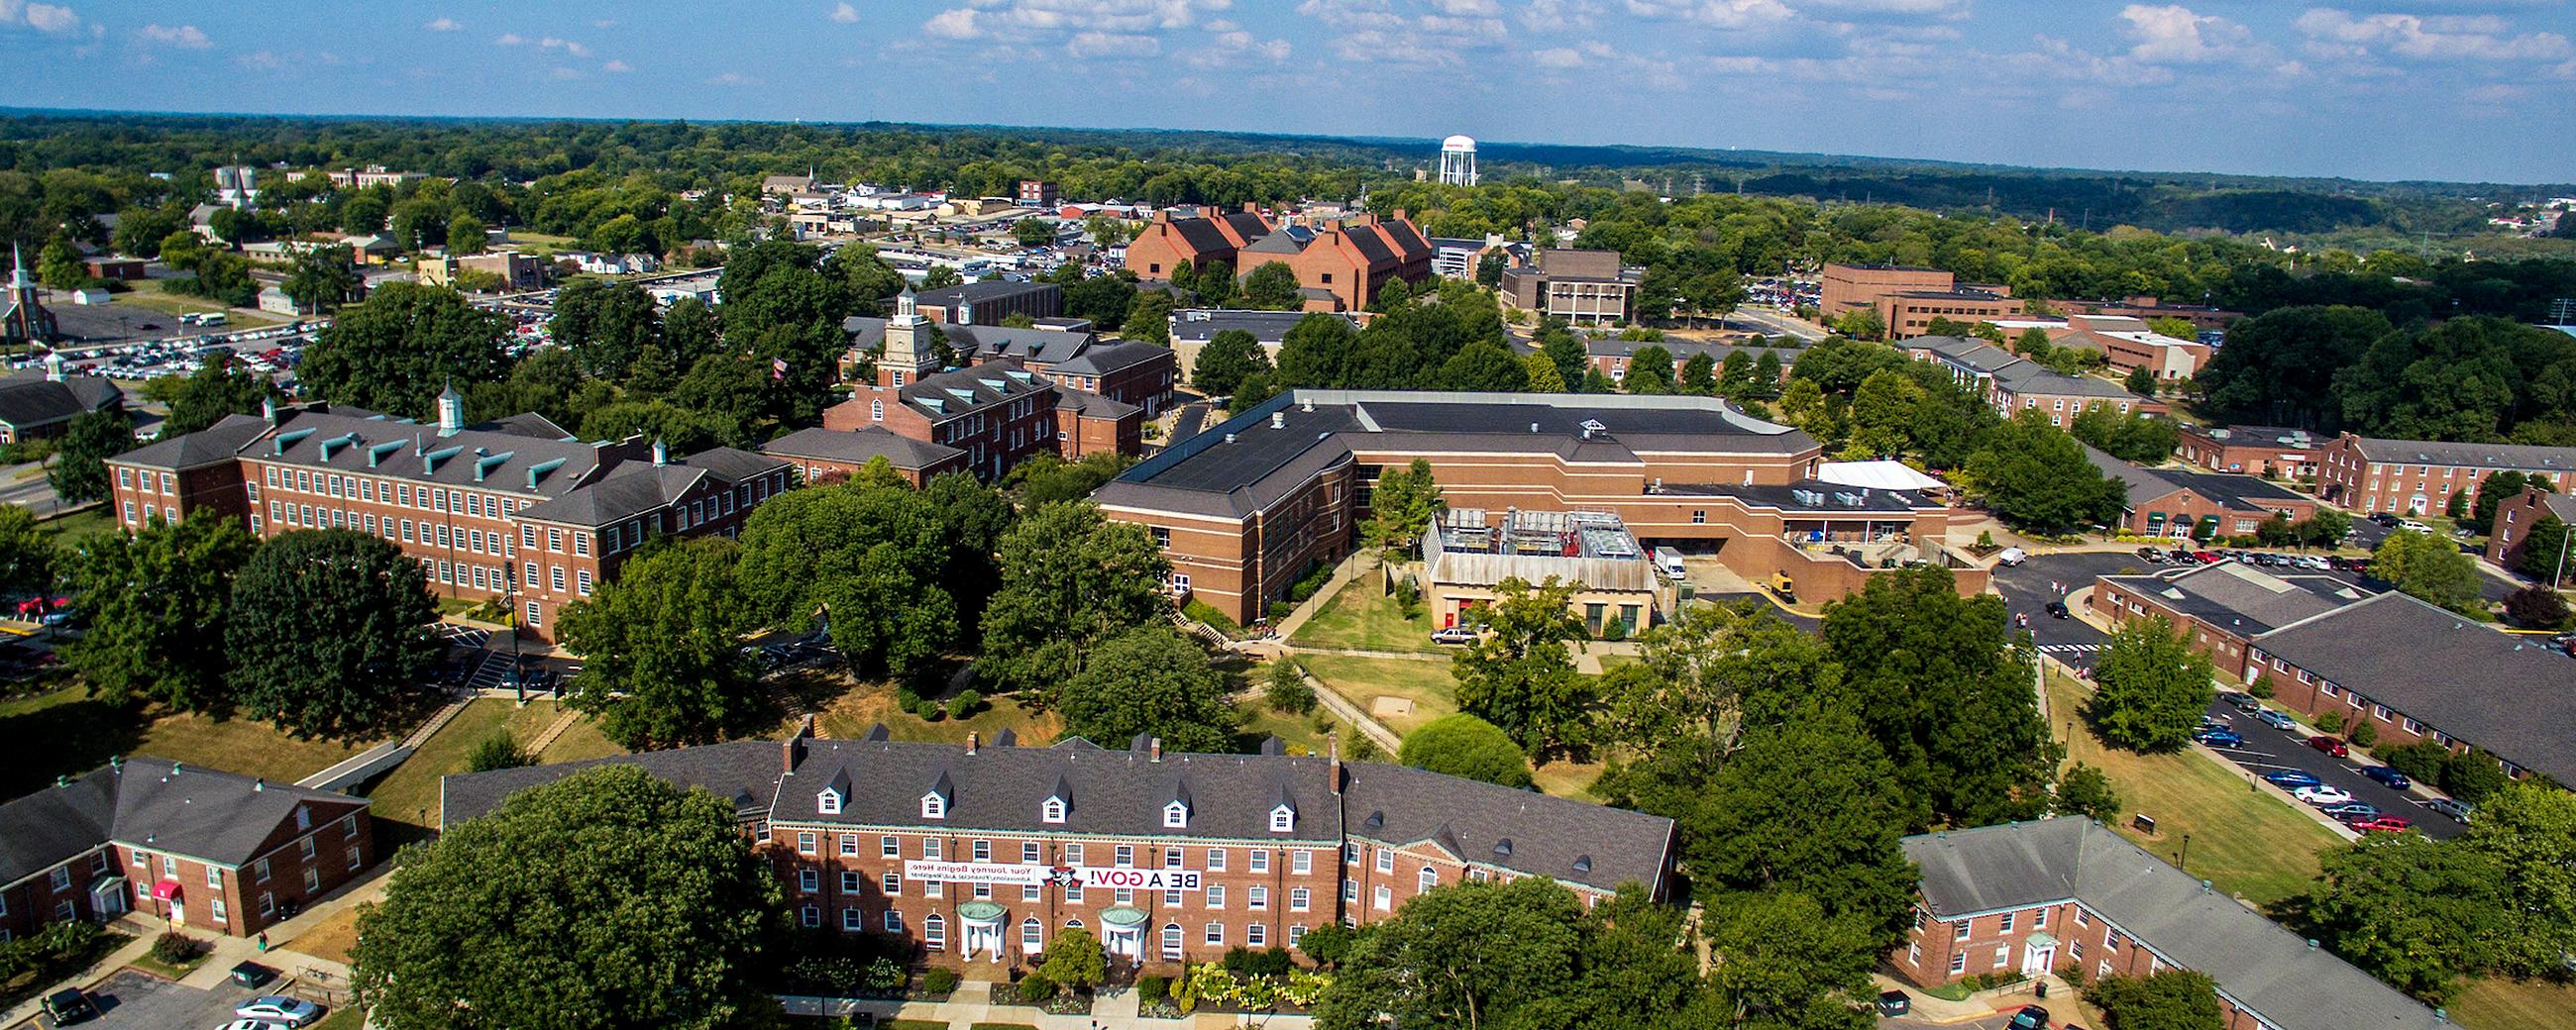 Modern-day campus aerial